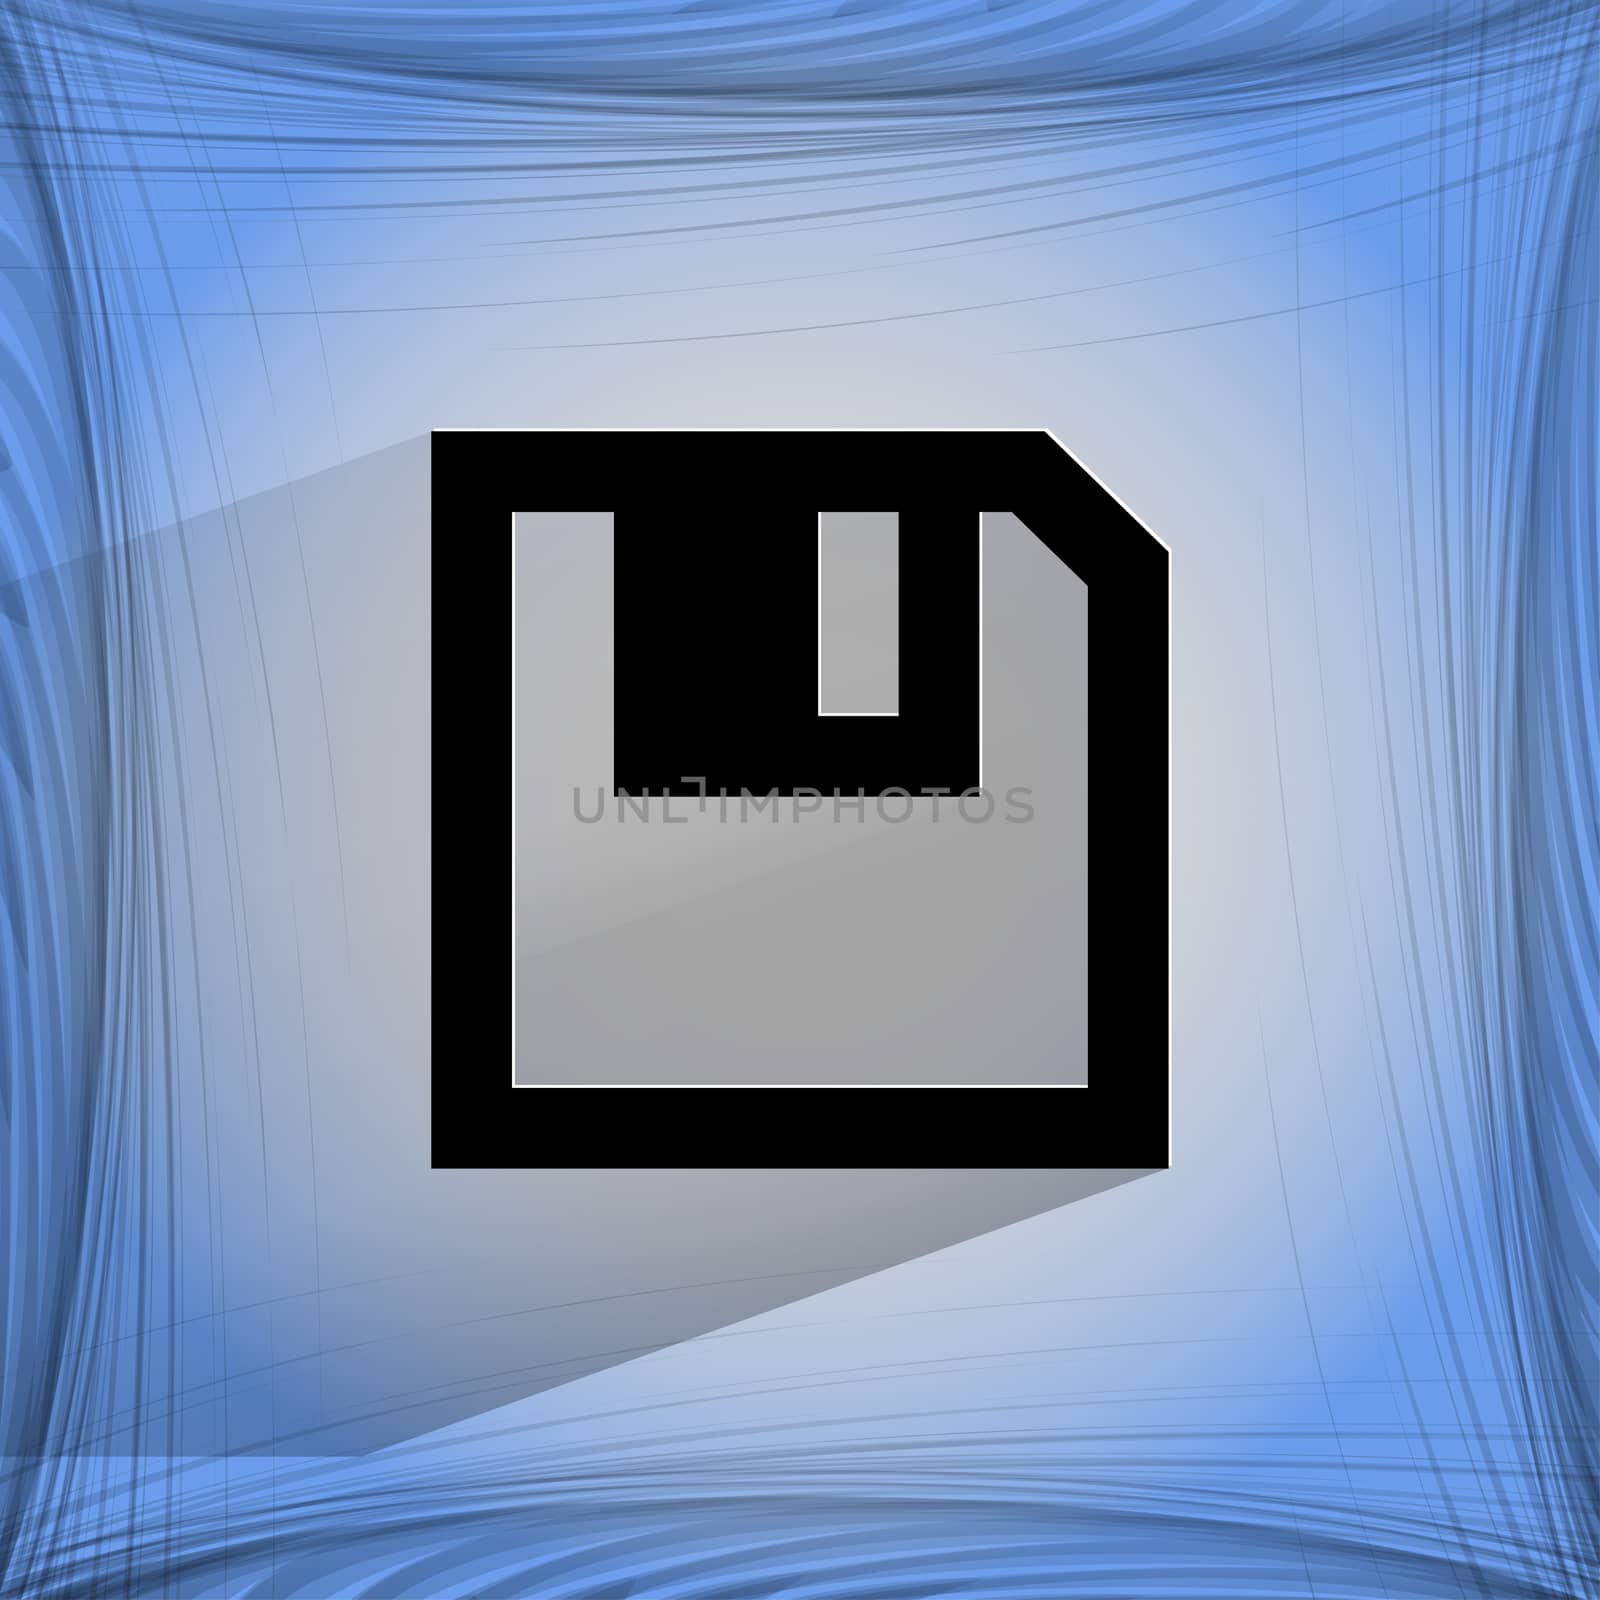 floppy disk. Flat modern web design on a flat geometric abstract background  by serhii_lohvyniuk